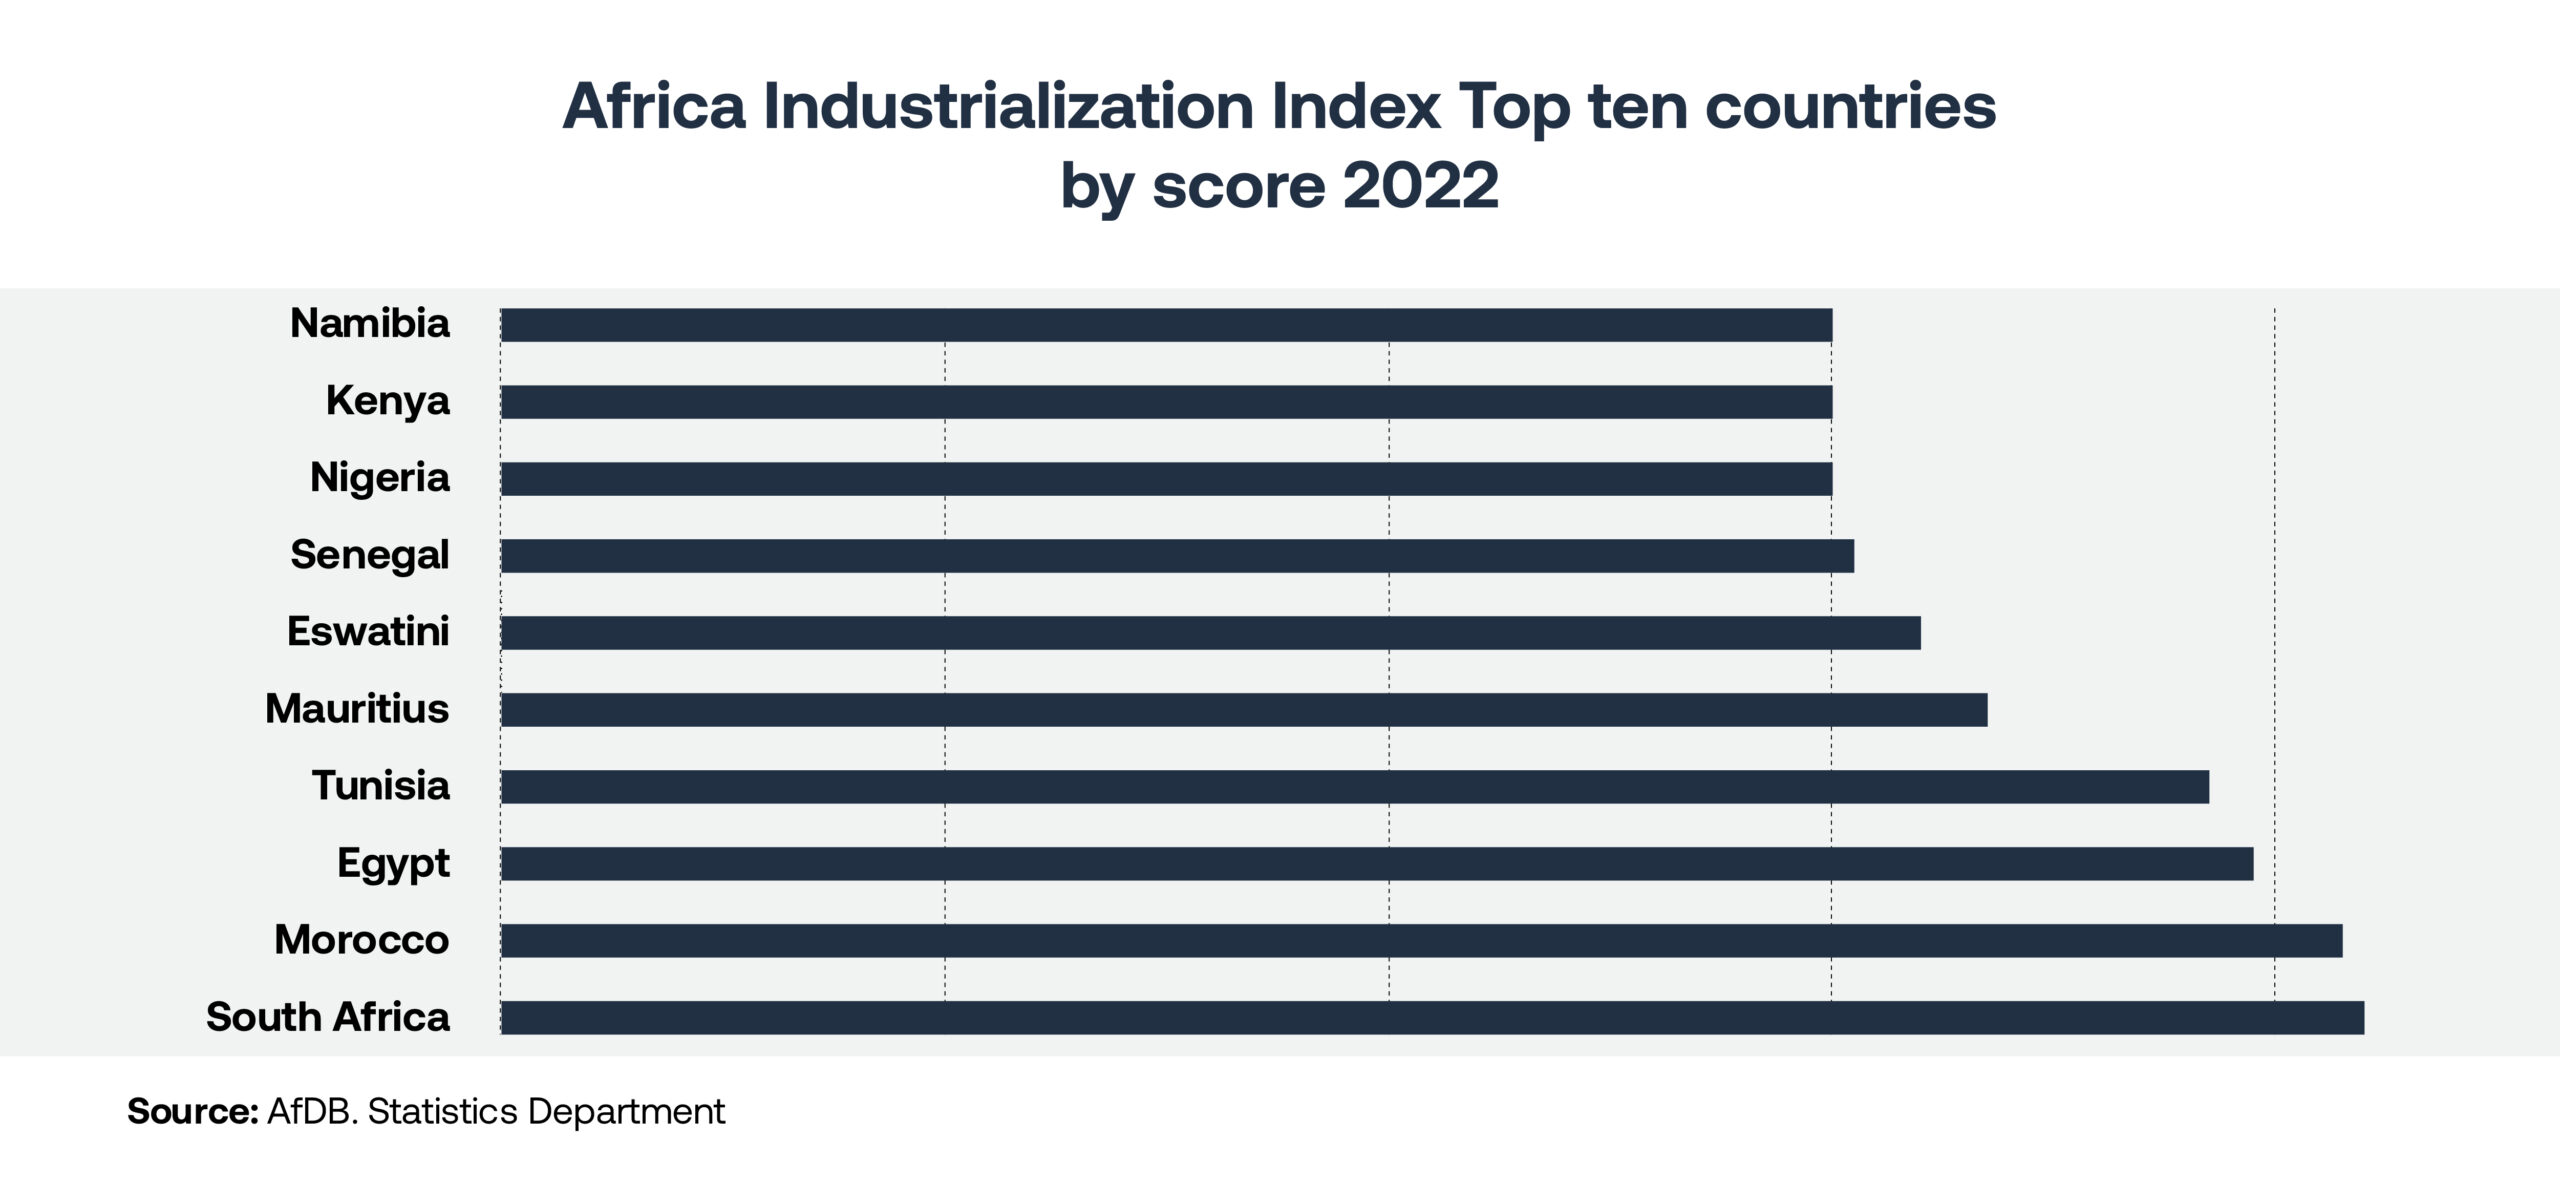 African Development Bank - Africa Industrialization Index Top Ten Countries by Score 2022